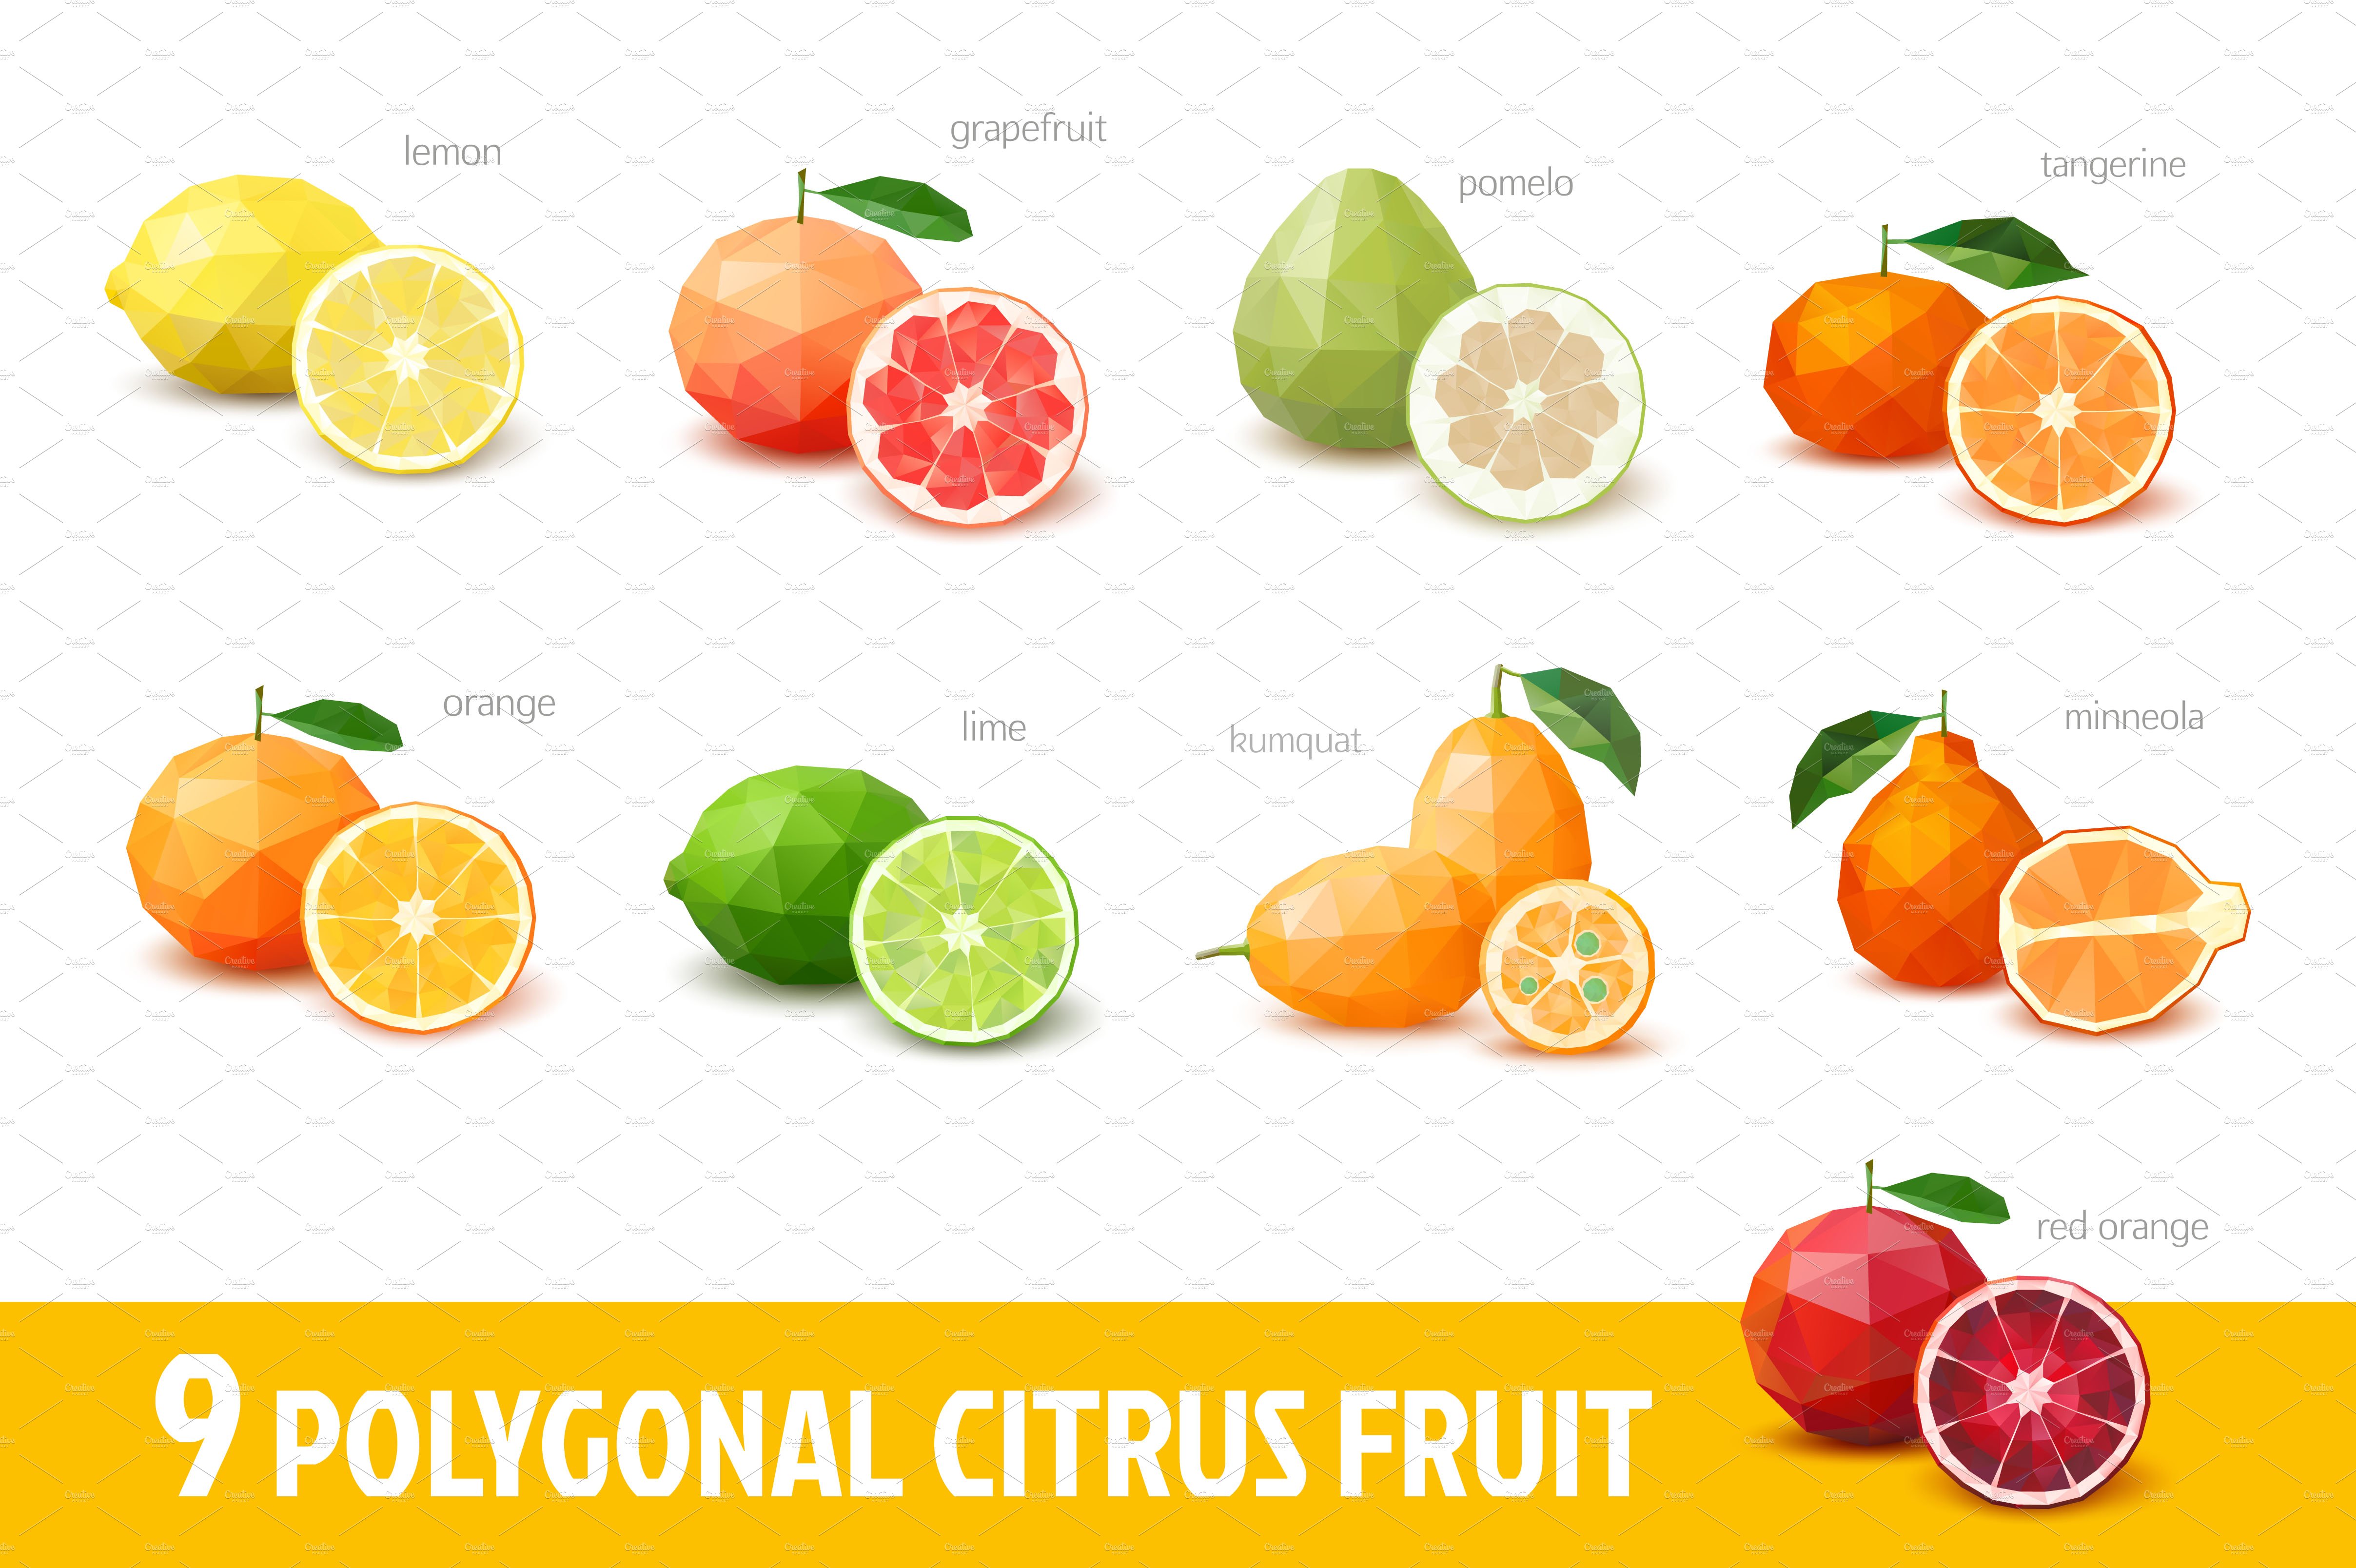 Polygonal citrus fruit cover image.